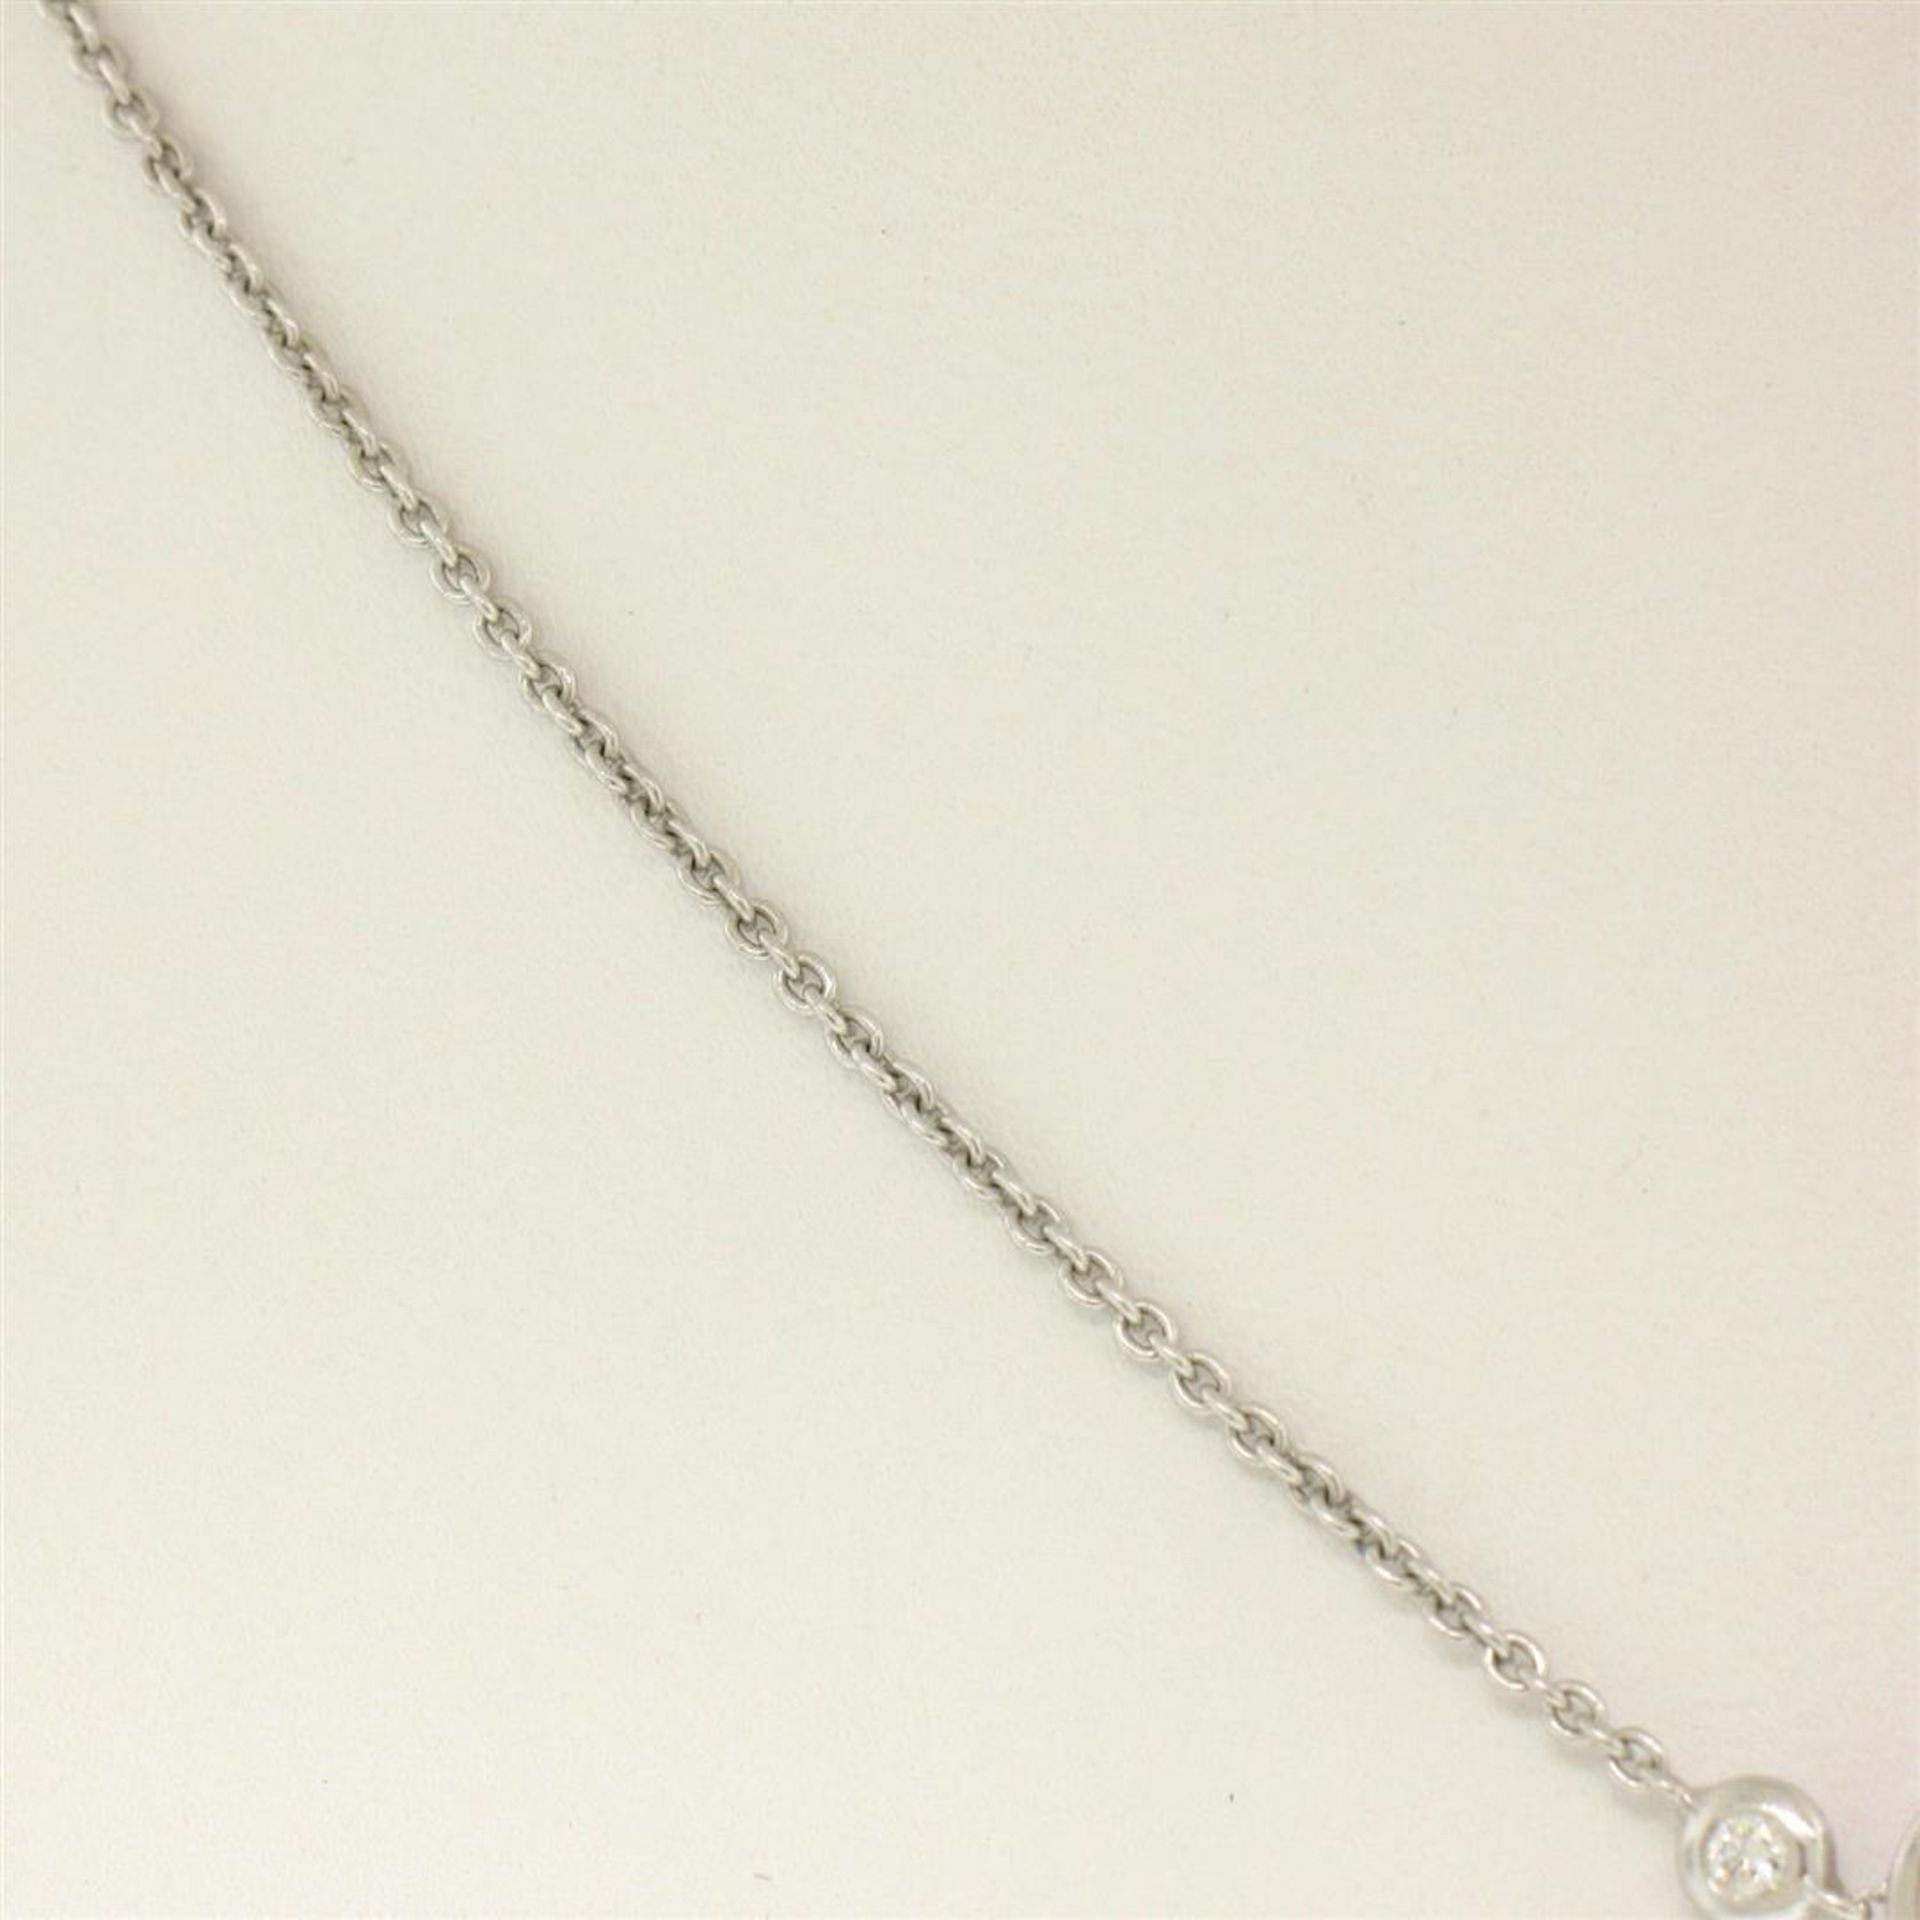 18K White Gold 16" 1.37 ctw GIA Pink Sapphire & Diamond Pendant Necklace - Image 6 of 9